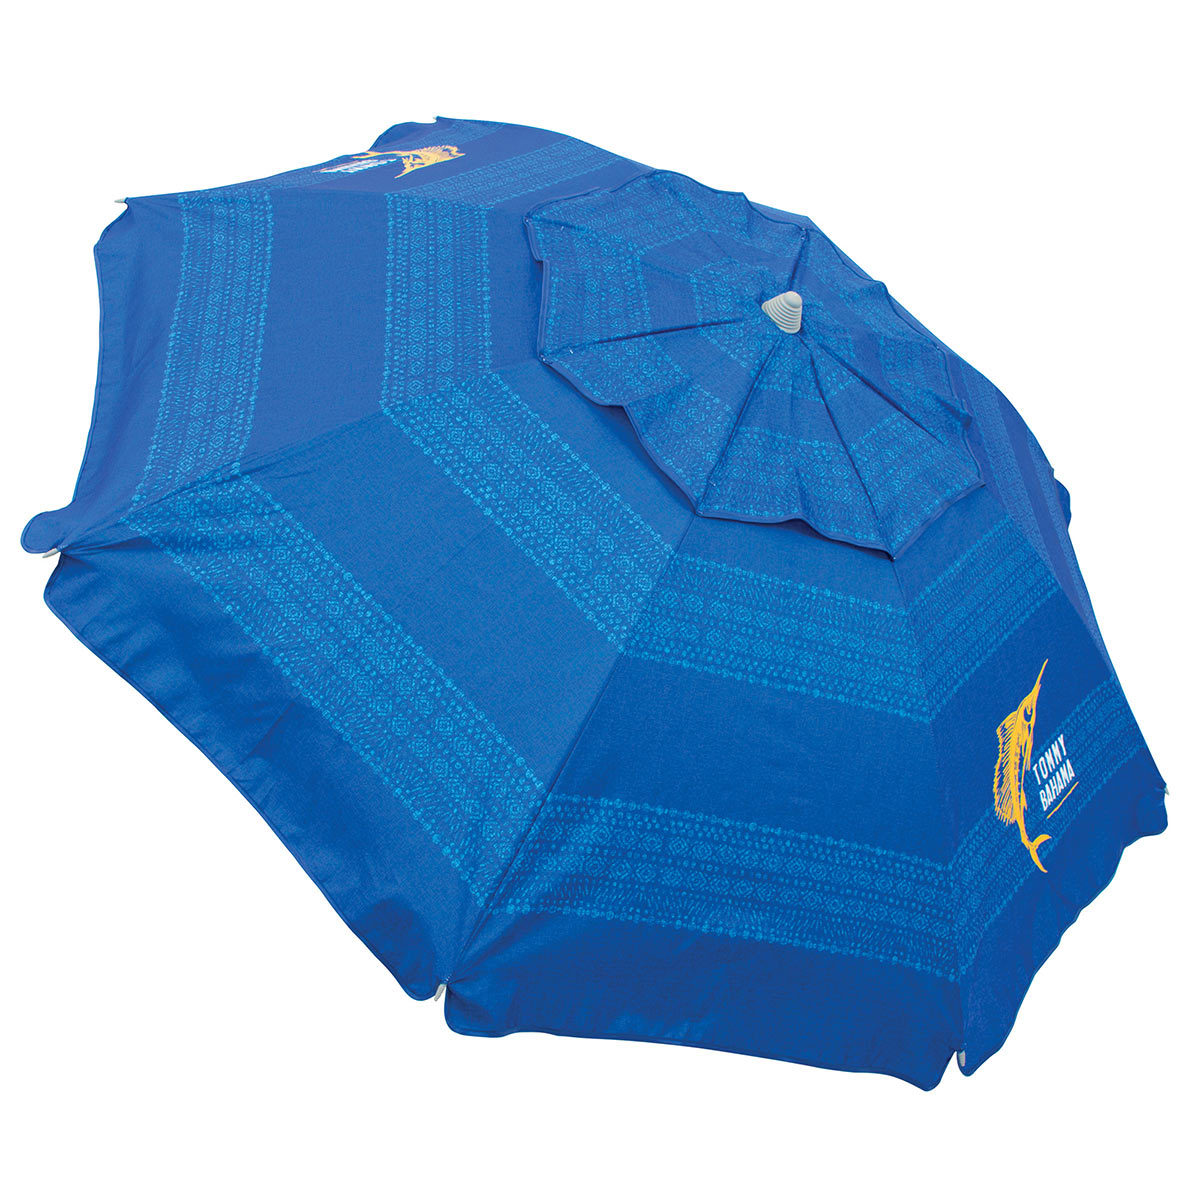 Tommy Bahama 7ft Beach Umbrella in Blue